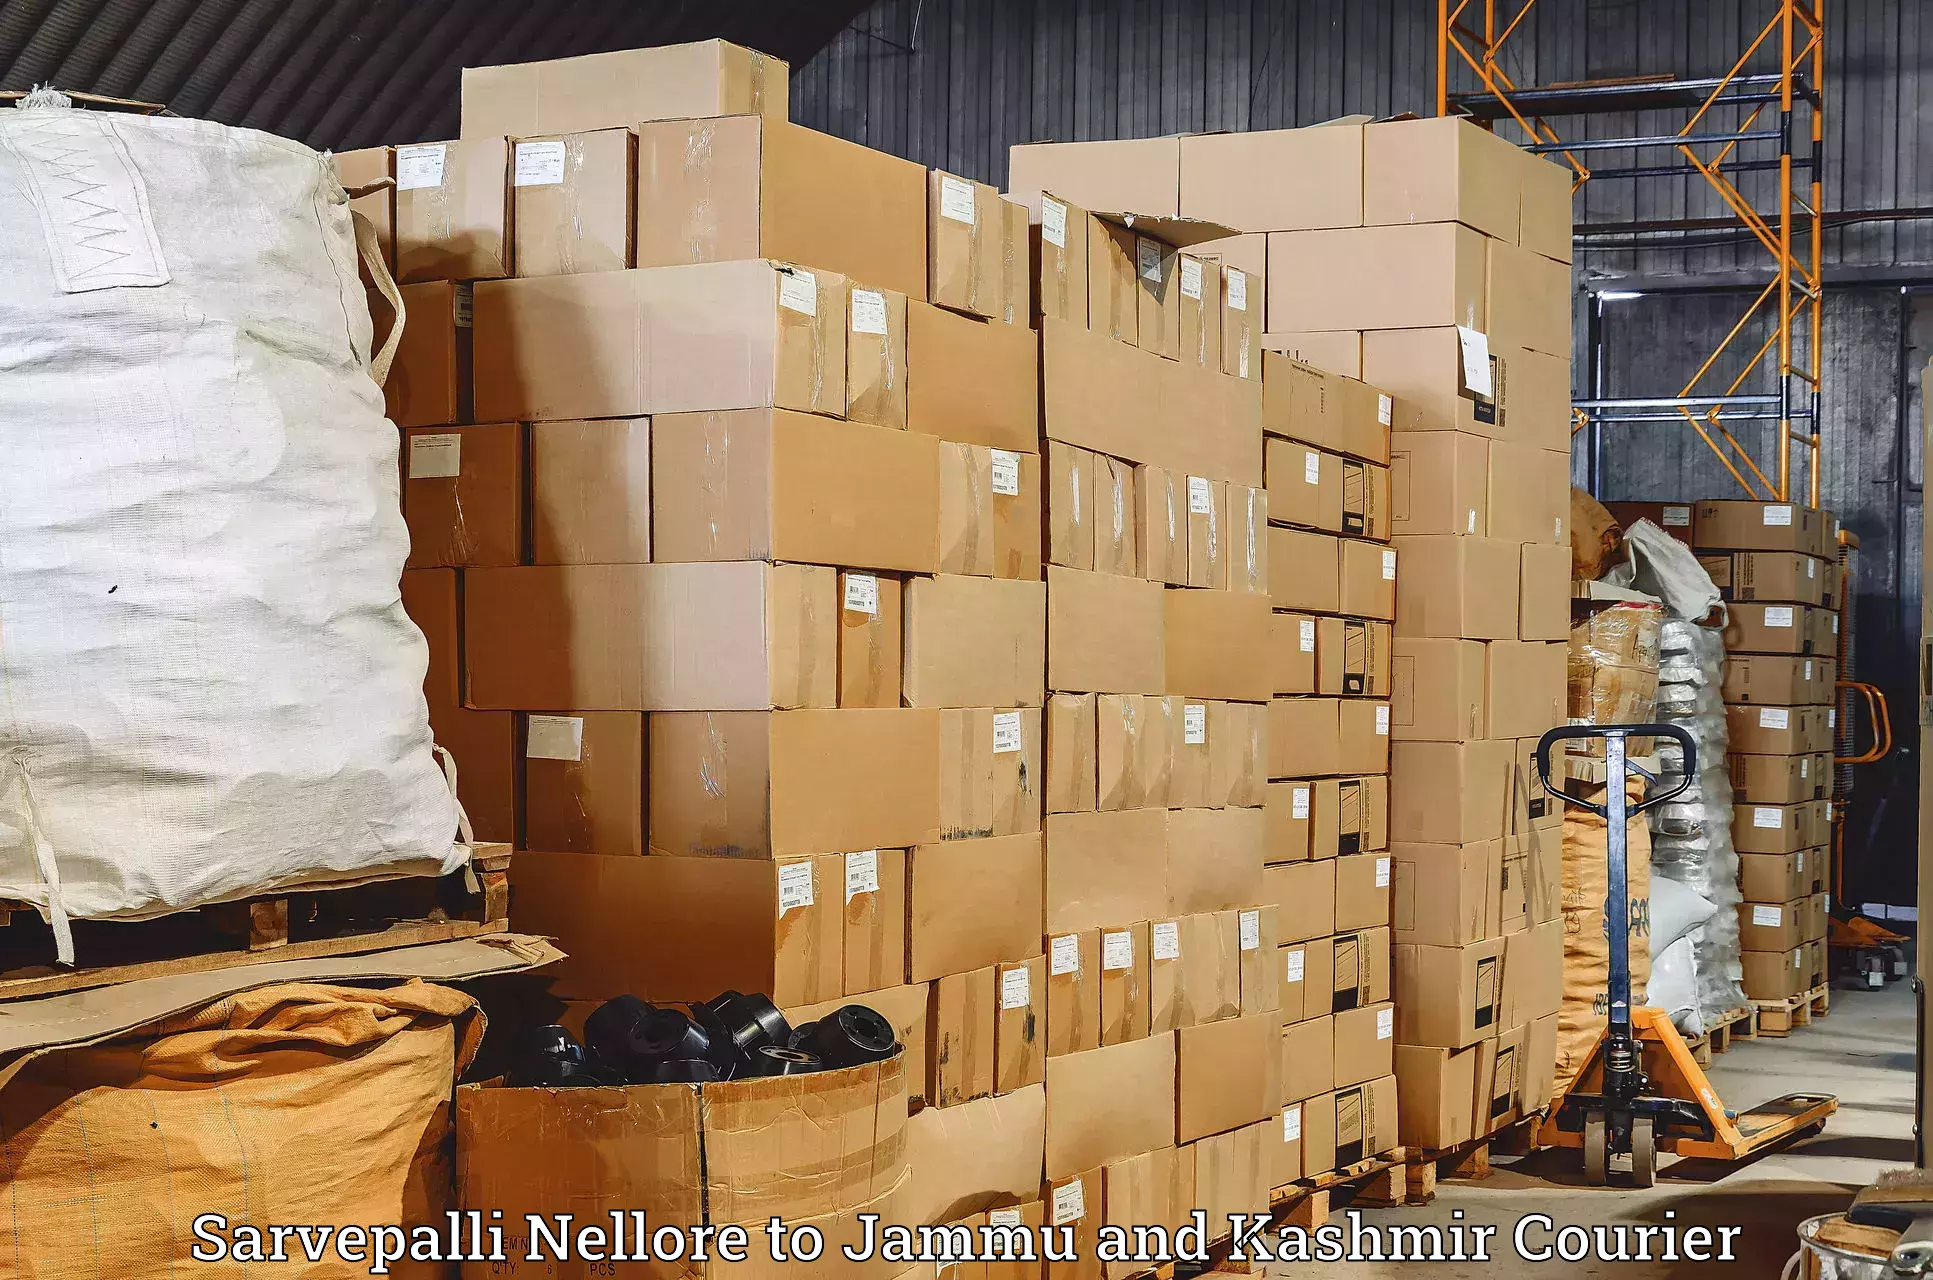 Cargo delivery service Sarvepalli Nellore to Ramban